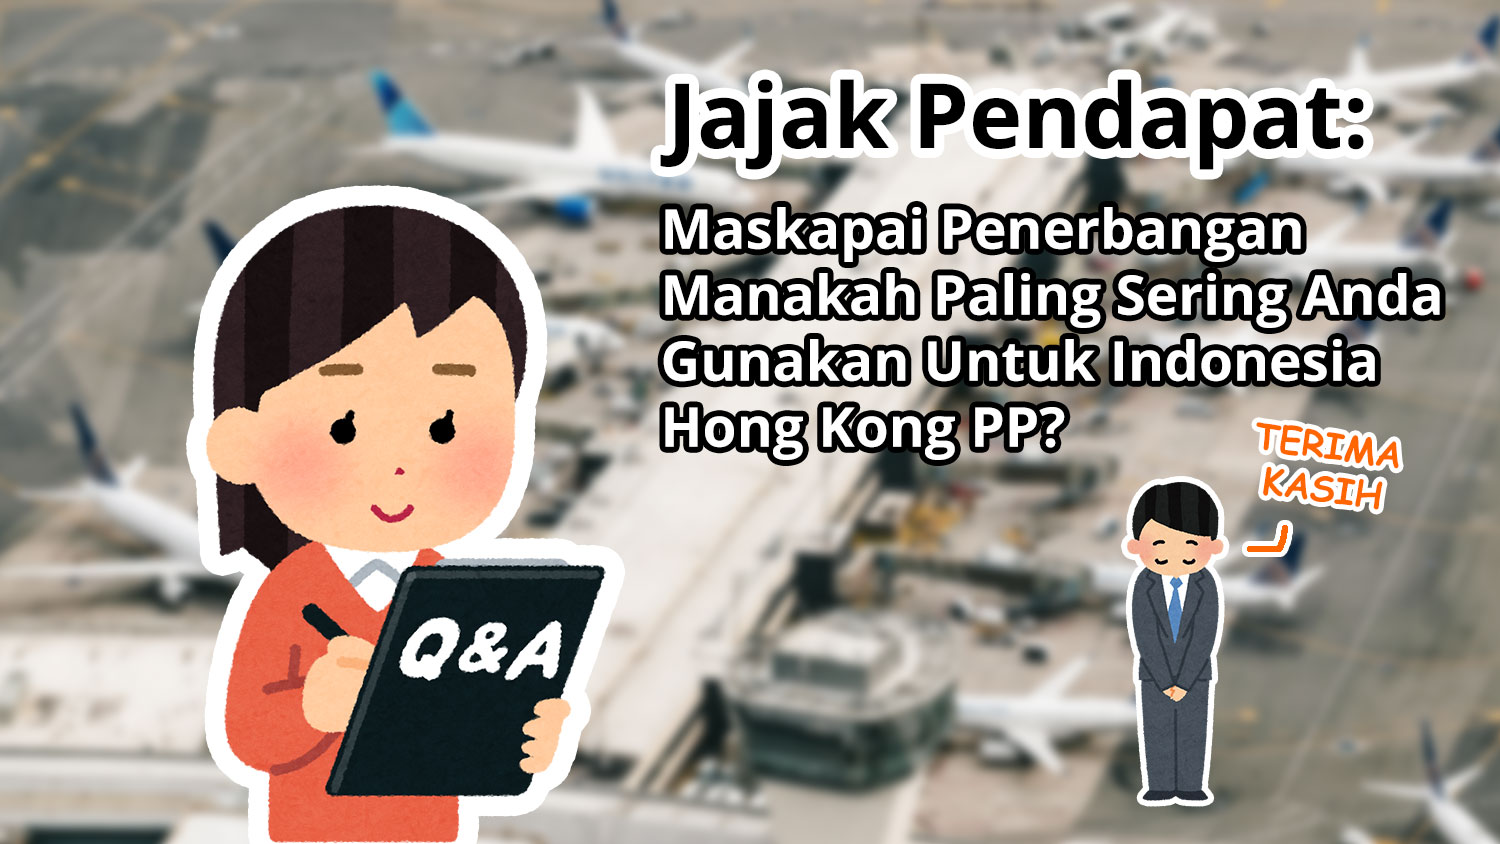 Maskapai Penerbangan Manakah Paling Sering Anda Gunakan Untuk Indonesia Hong Kong PP?